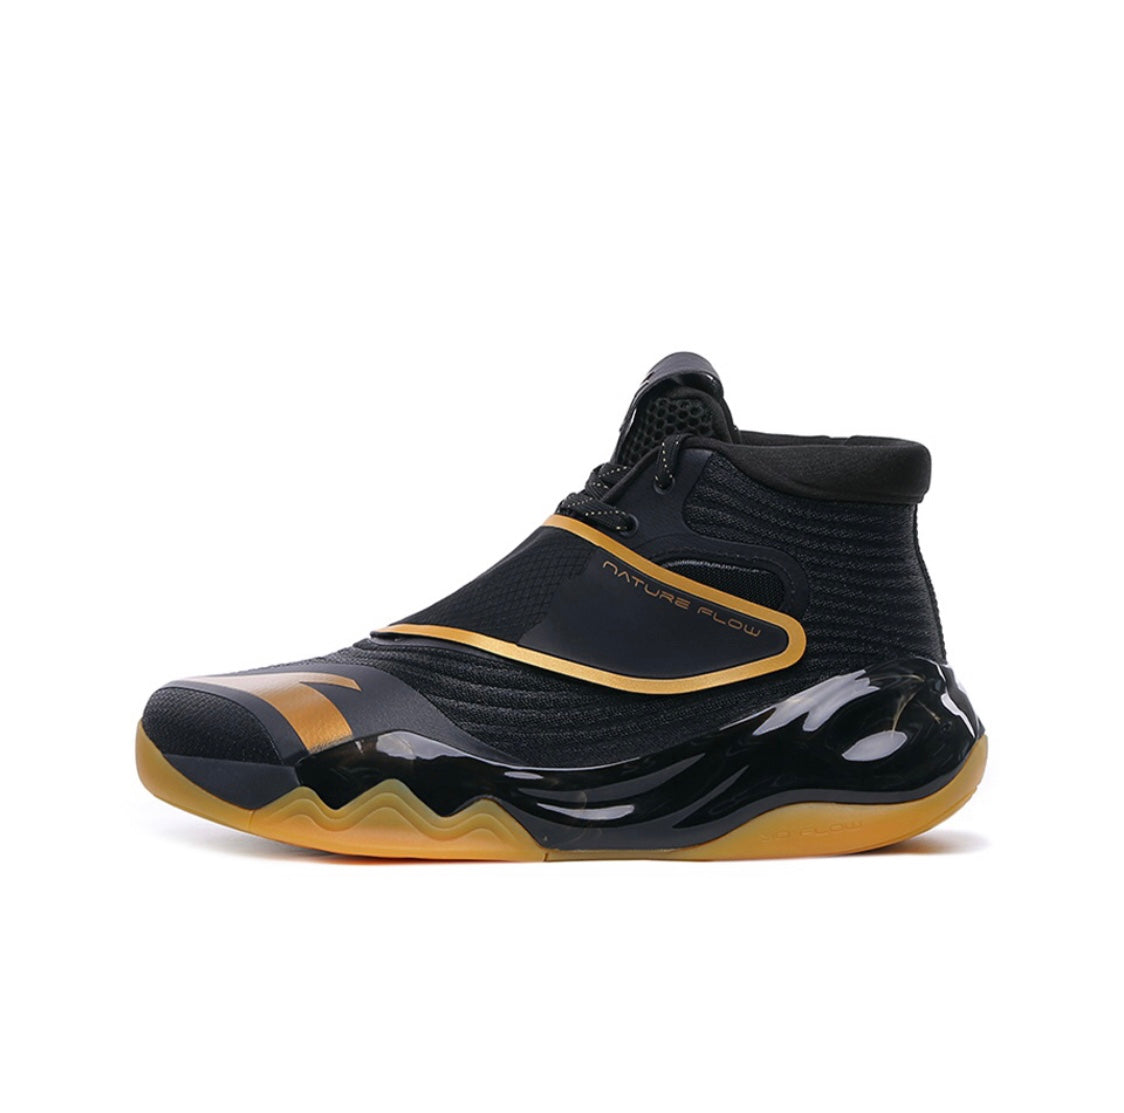 Anta Men's Klay Thompson Kt6 "Black/Gold" High Basketball Shoes